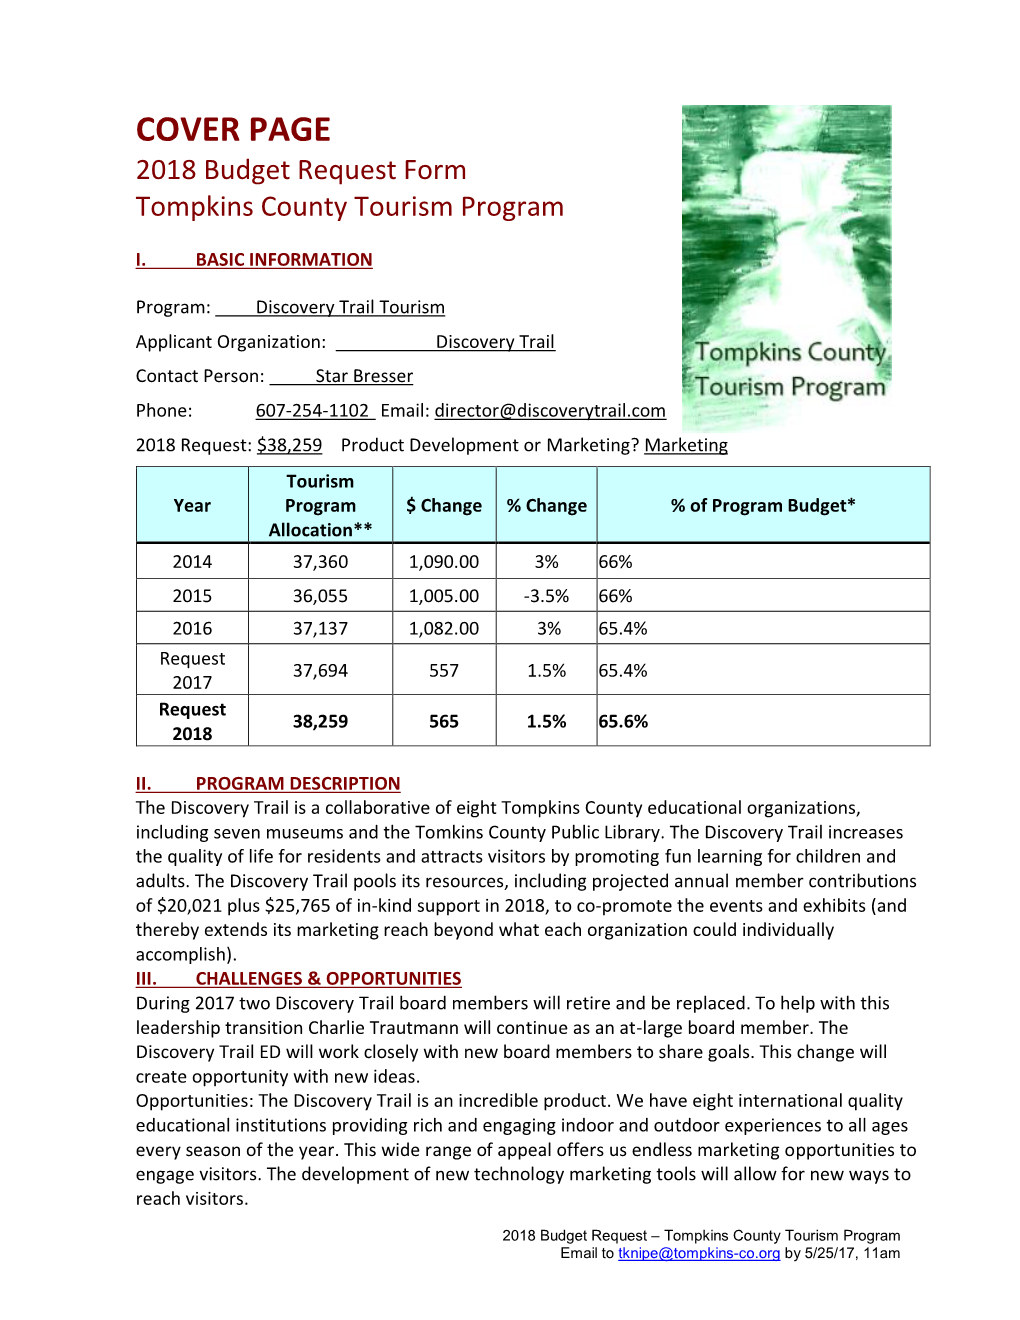 COVER PAGE 2018 Budget Request Form Tompkins County Tourism Program